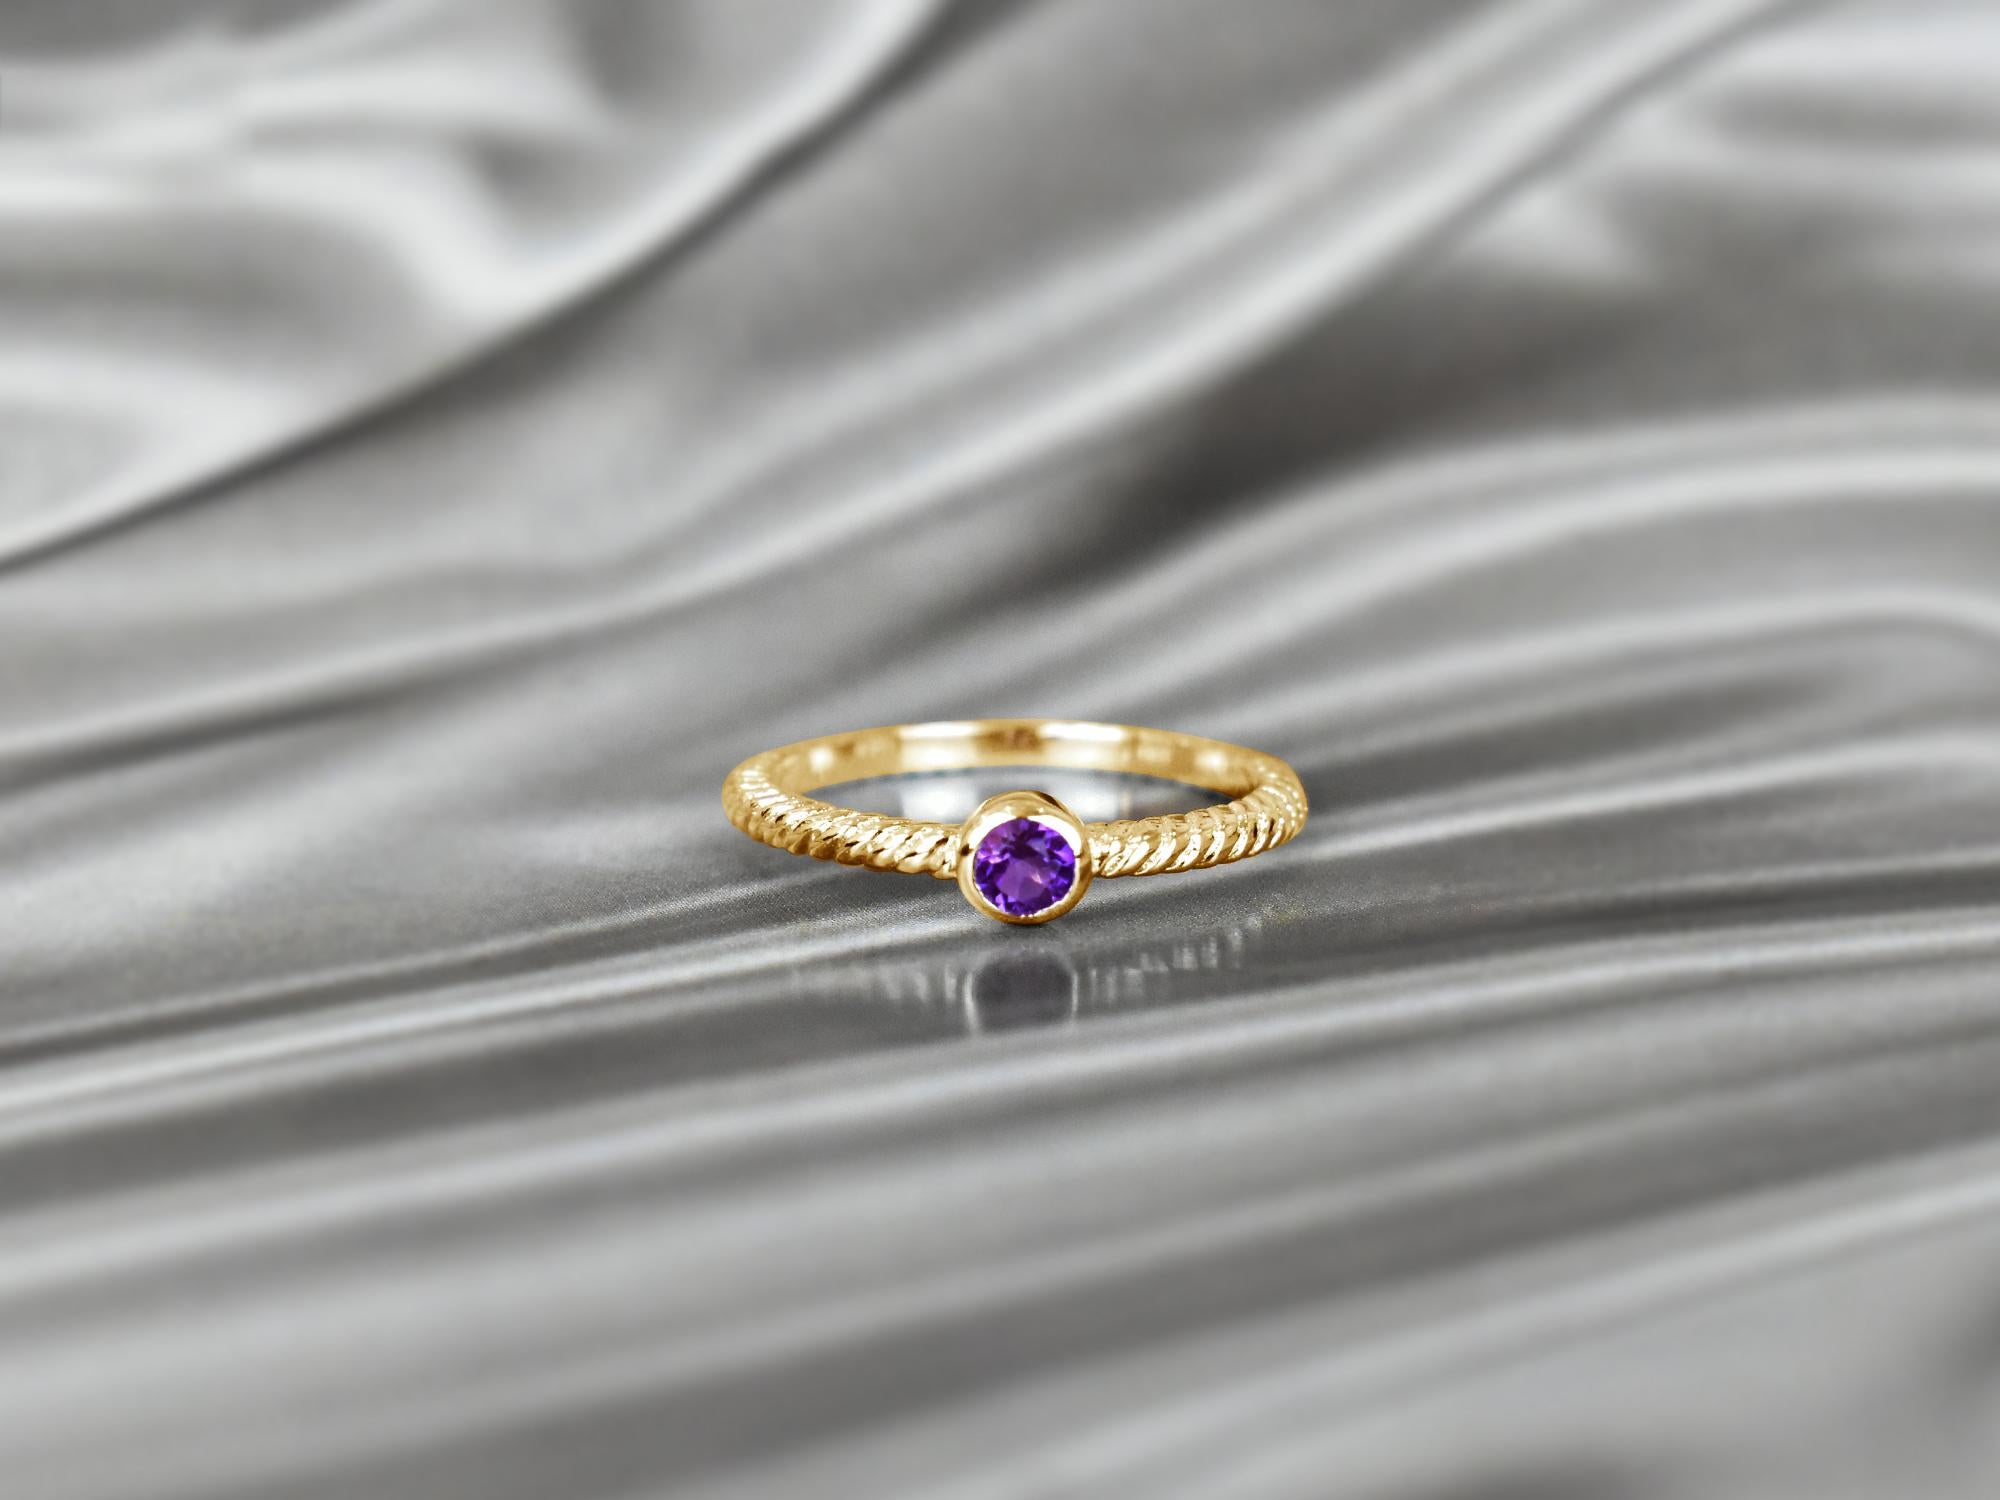 For Sale:  10k Gold Round Gemstone 3.5mm Round Gemstone Ring Birthstone Ring Stackable Ring 3